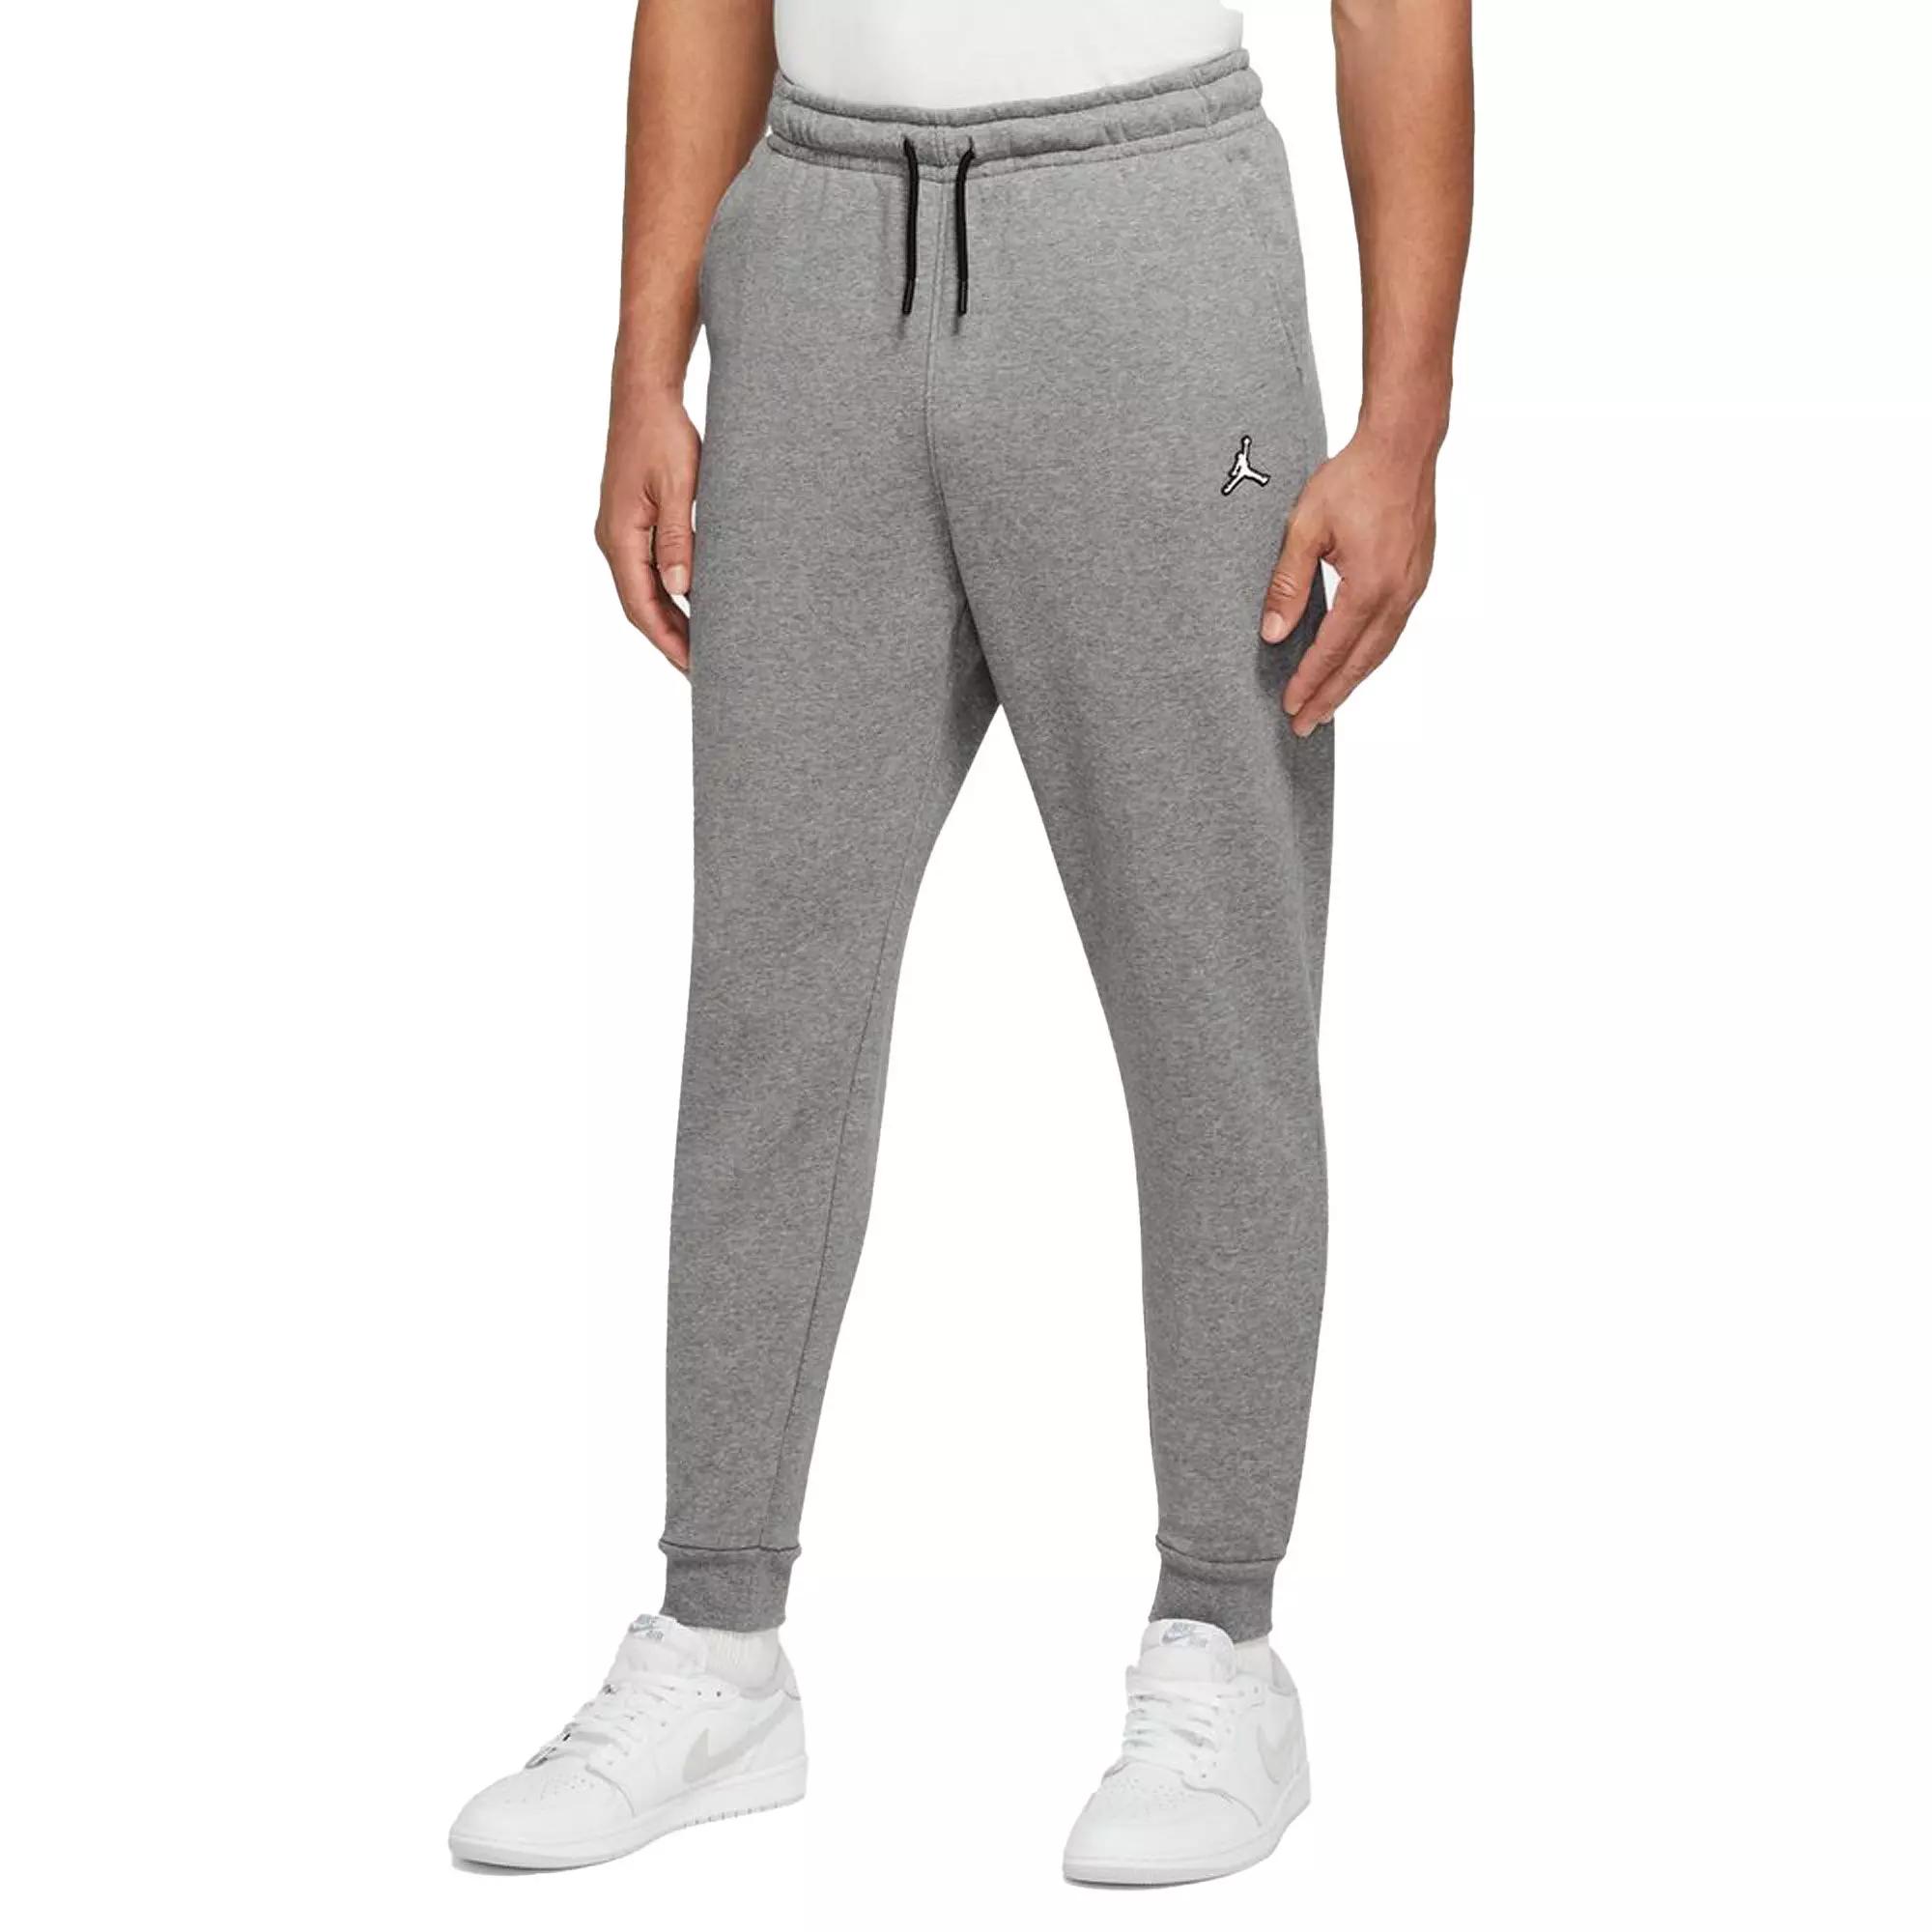 Nike Jordan Jumpman Logo Men Fleece Pants, Black, Medium : :  Clothing, Shoes & Accessories